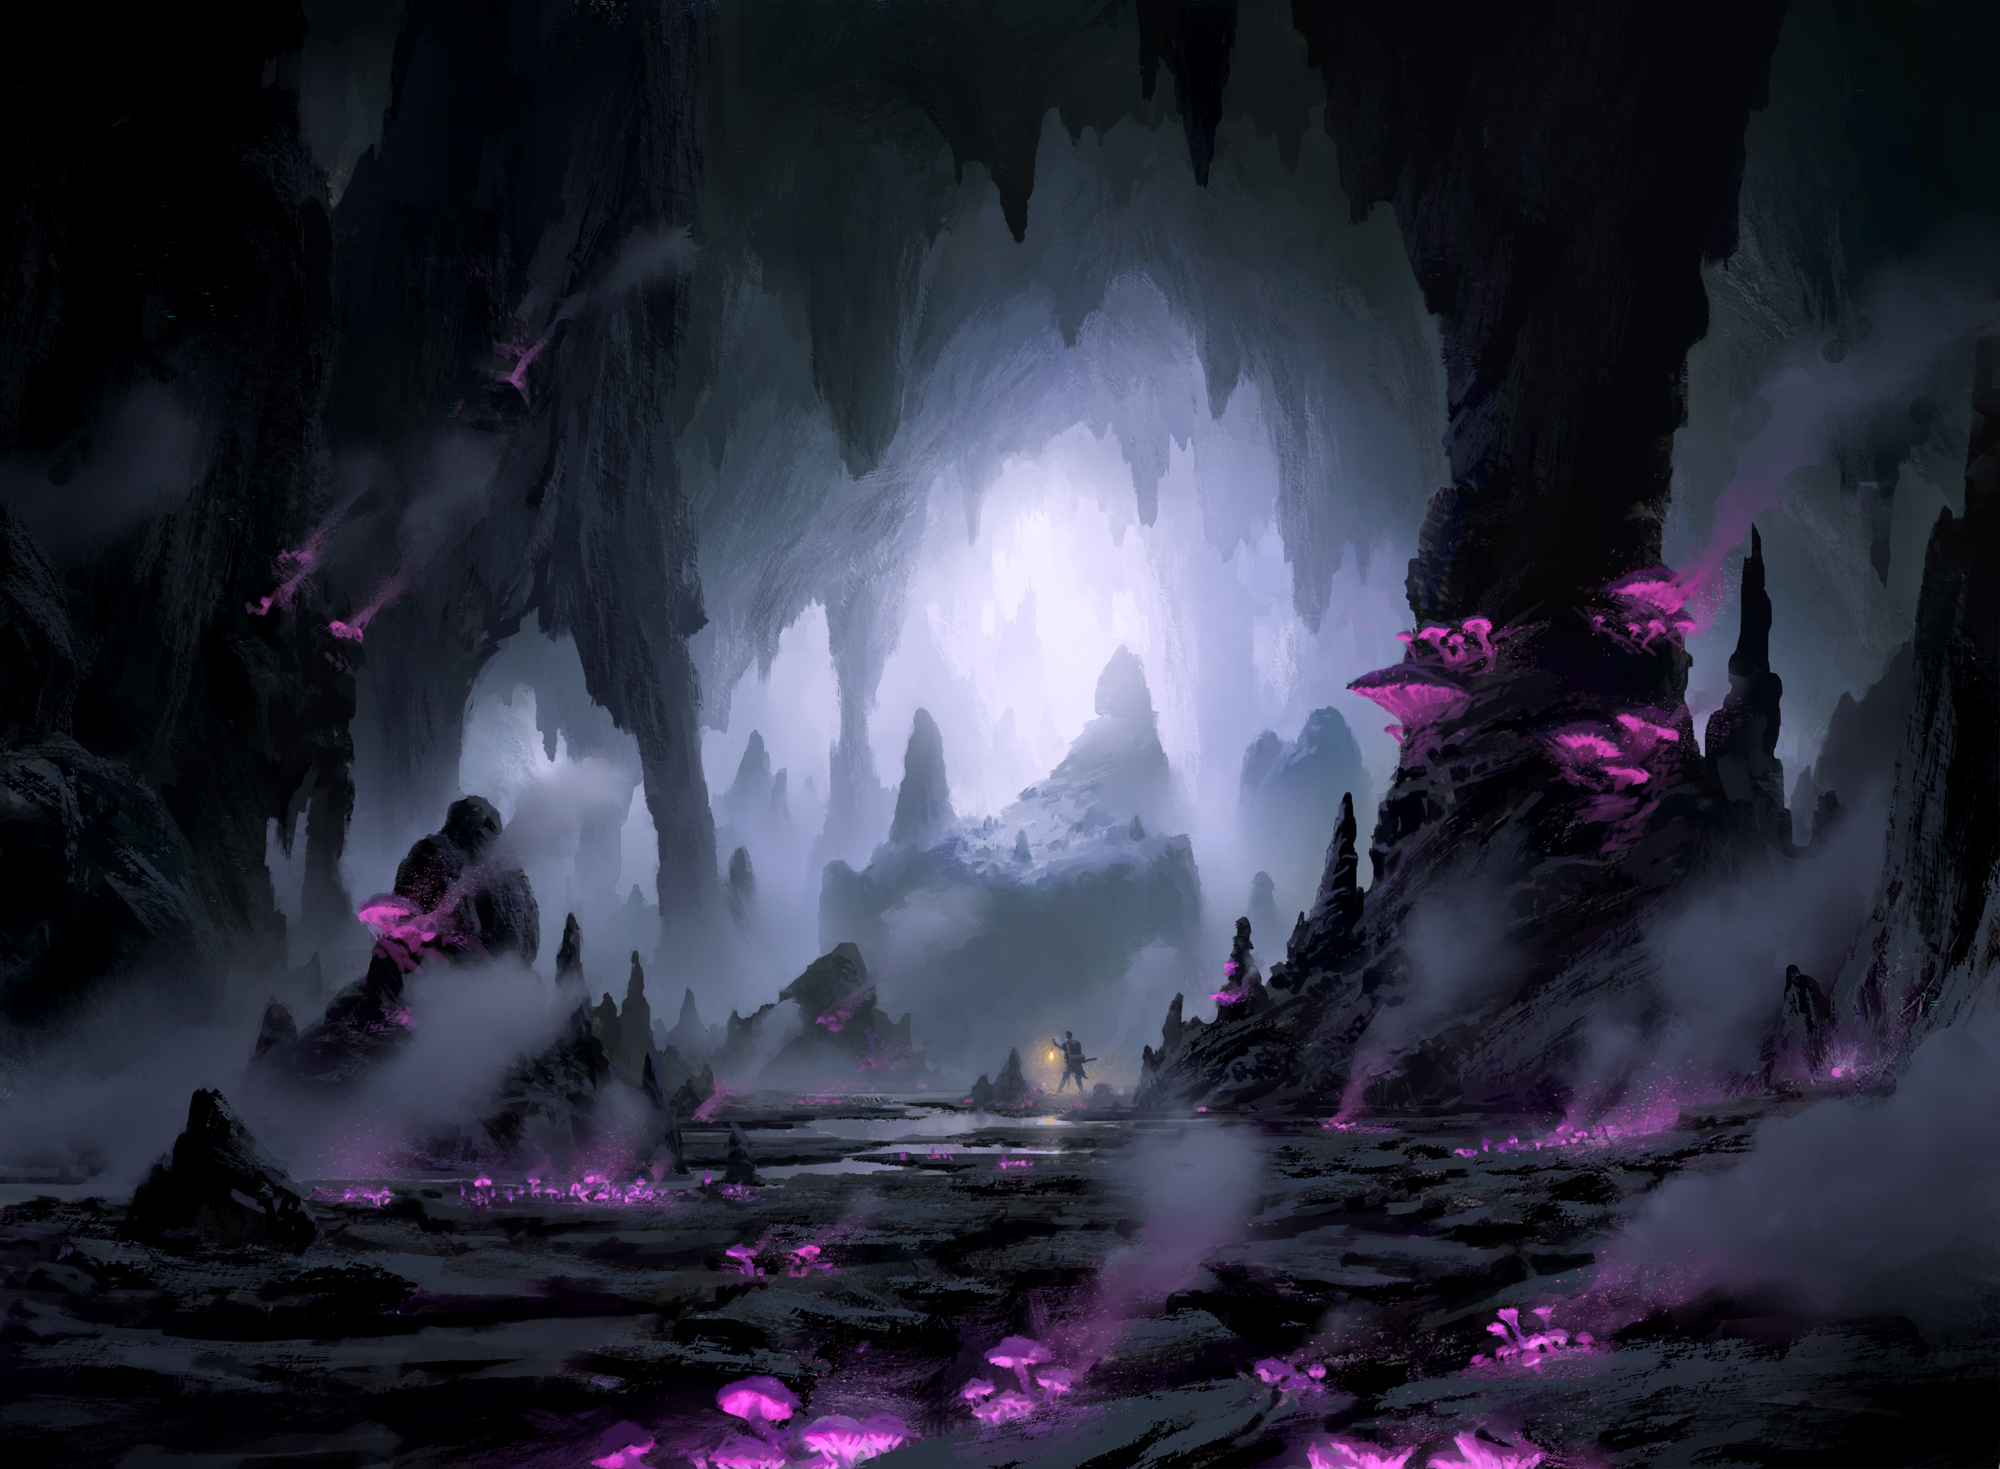 Dark caverns with glowing purple mushrooms and steam